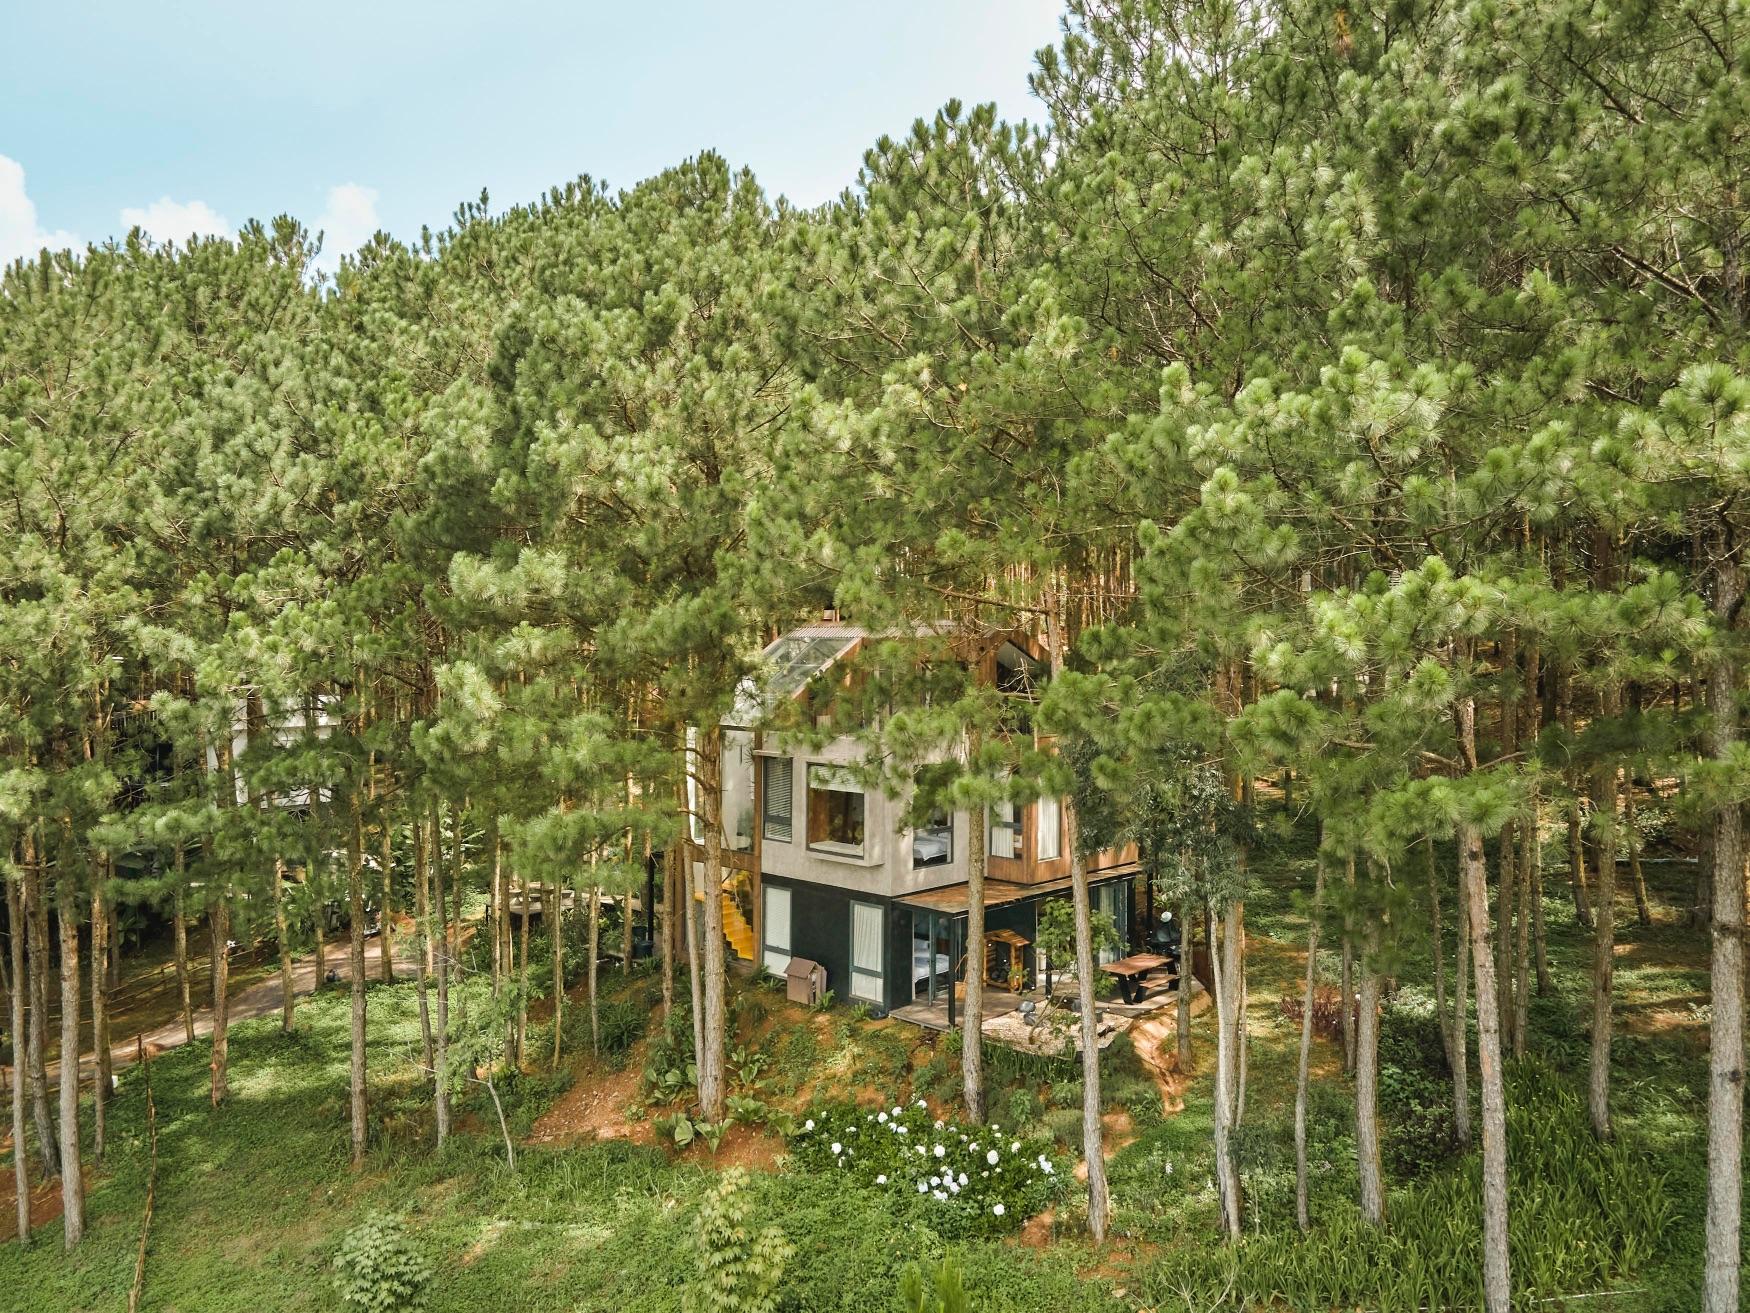 Inside the dream-like retreat hidden in the pine forest of Dalat, Vietnam